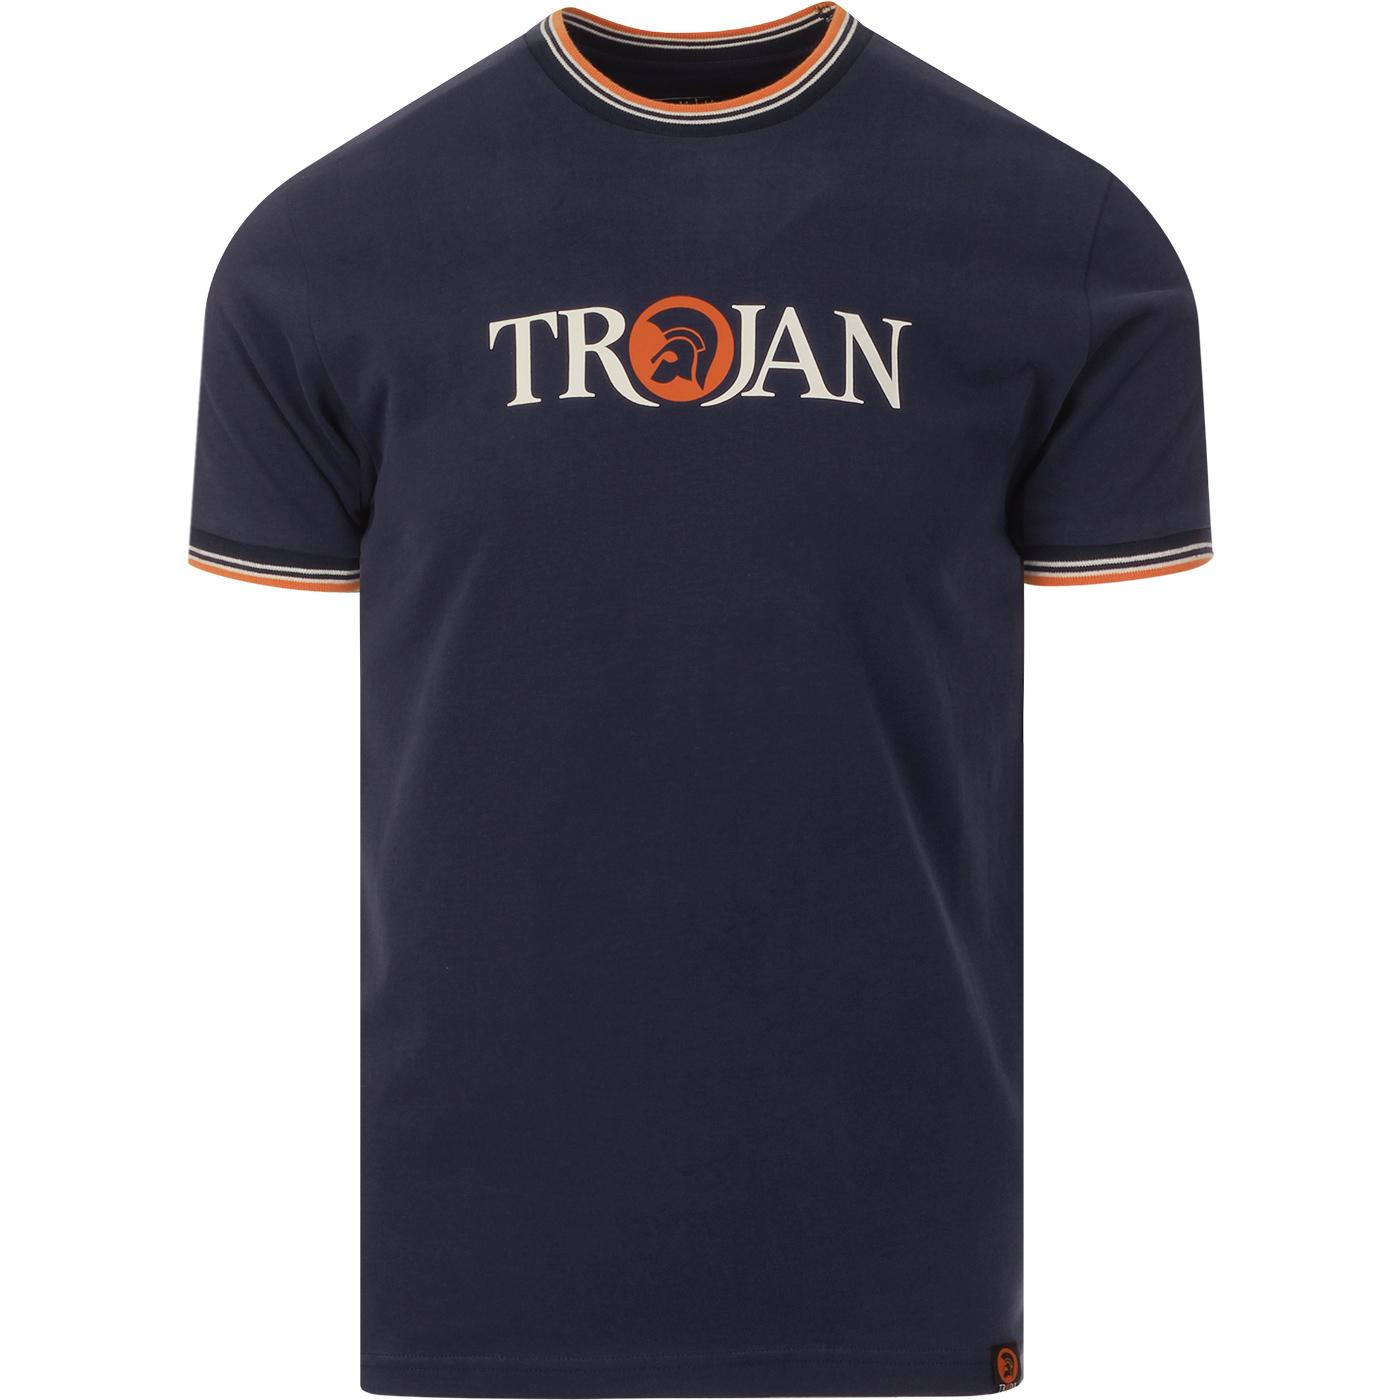 TROJAN RECORDS Mod Trojan Signature Ringer Tee (N)